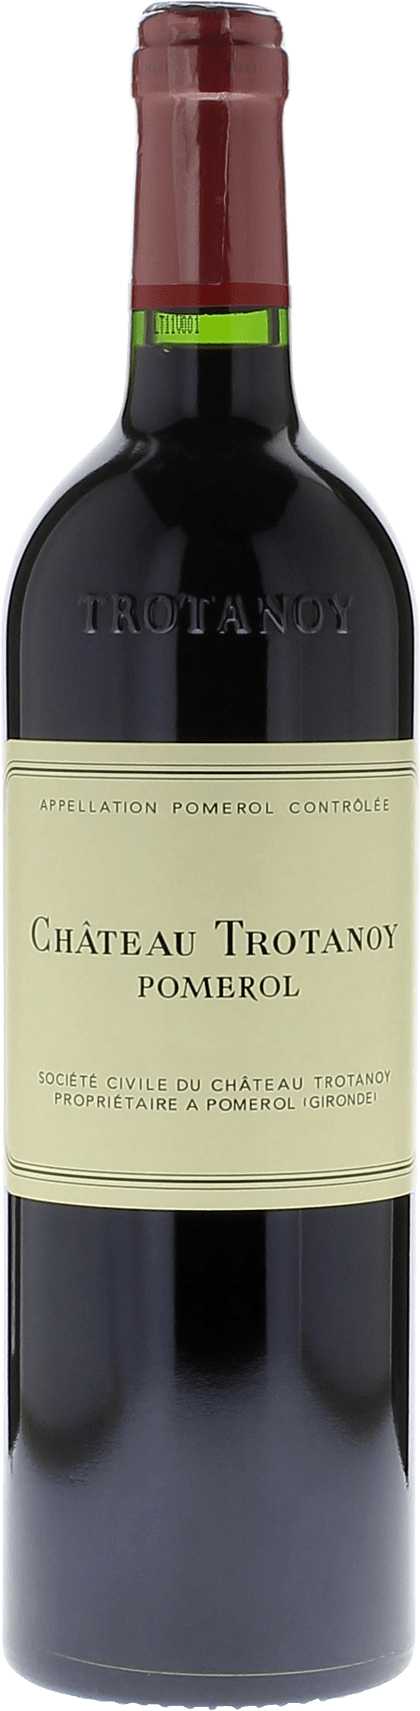 Trotanoy 2002  Pomerol, Bordeaux rouge